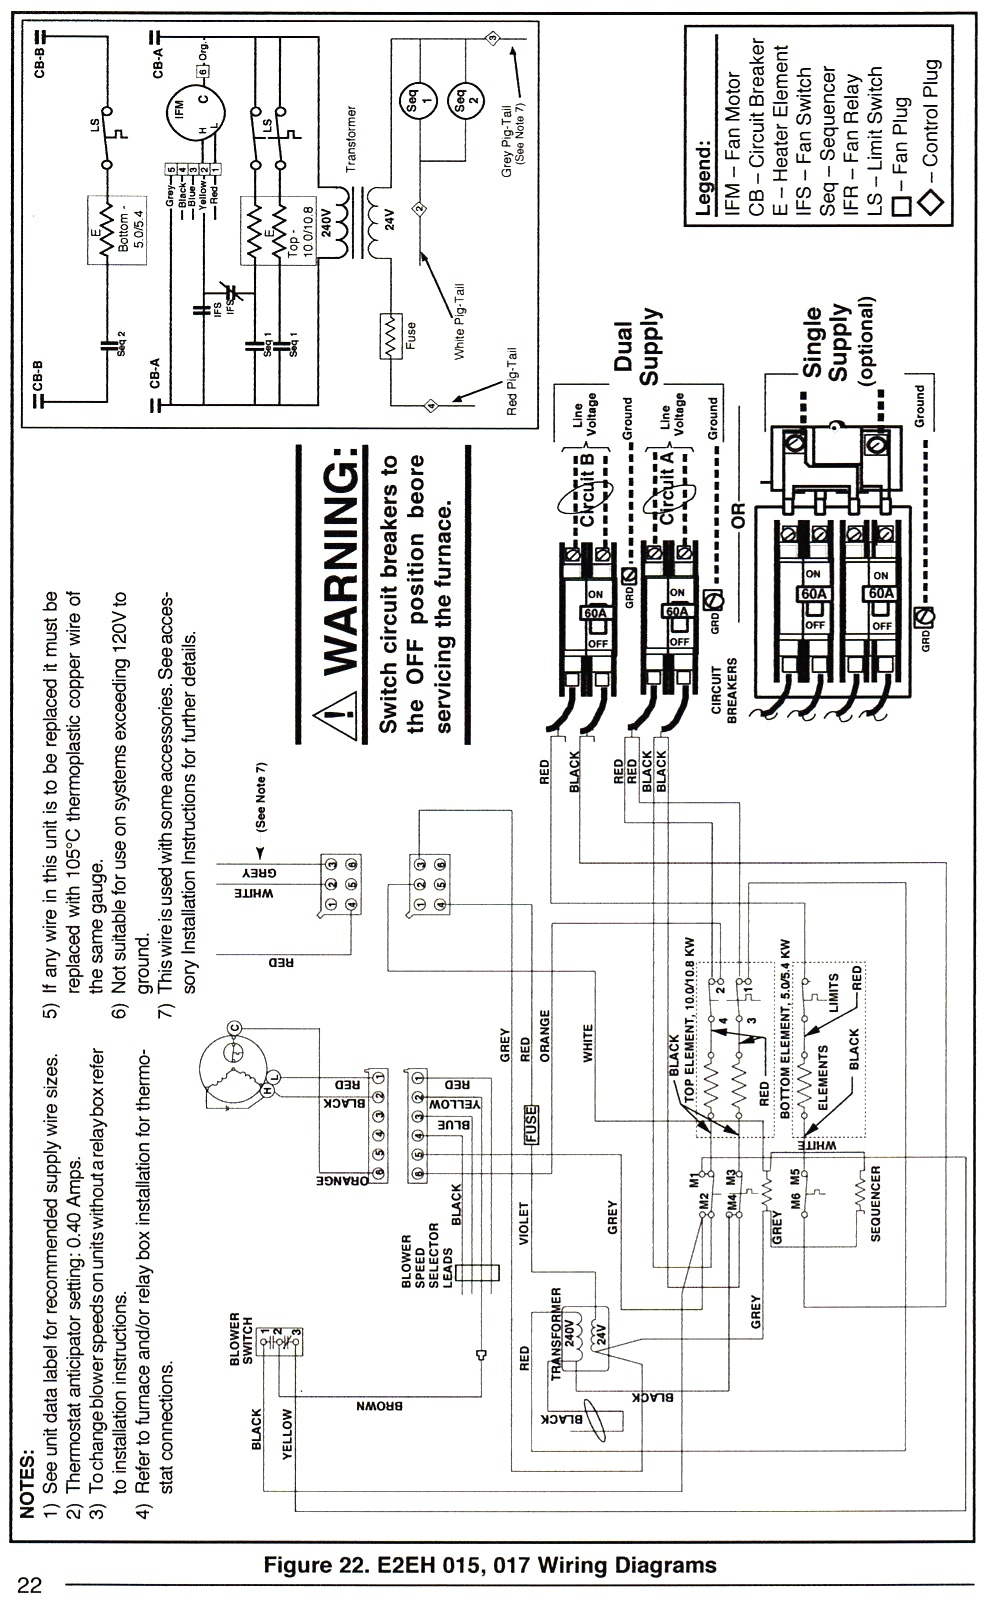 Nordyne Mobile Home Electric Furnace Wiring - Wiring Block Diagram - Nordyne Wiring Diagram Electric Furnace